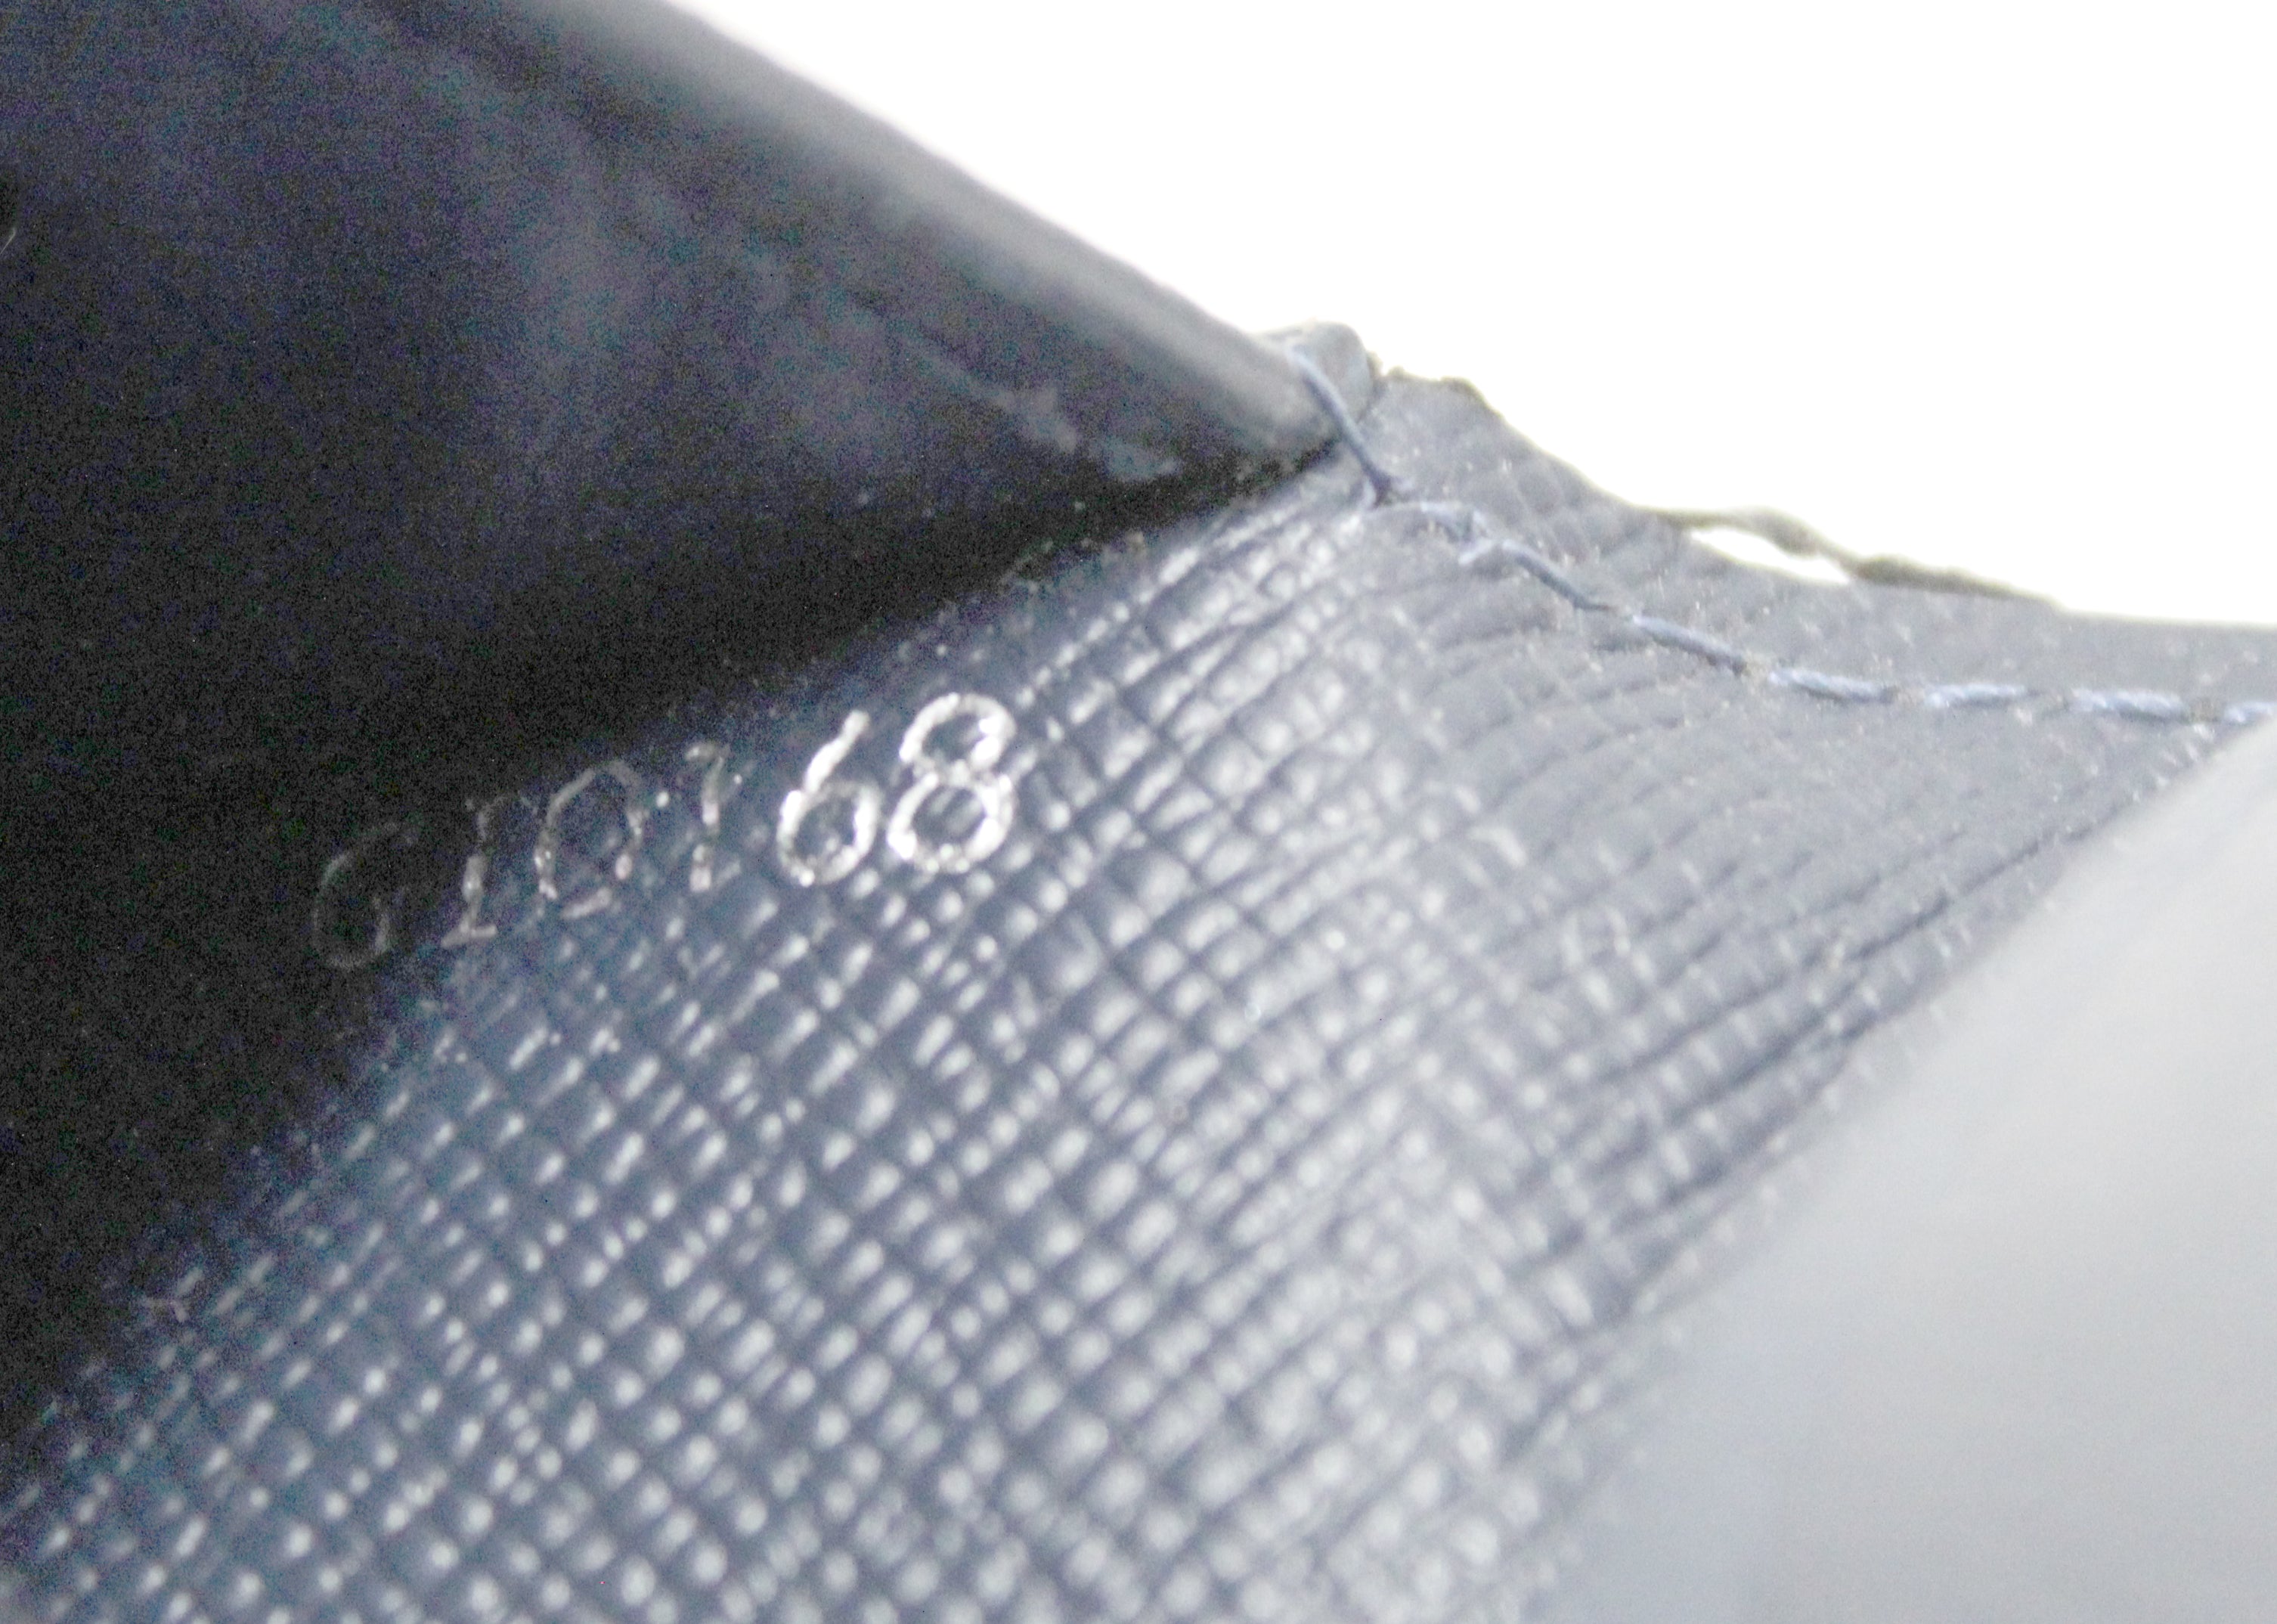 Louis Vuitton Epi Leather Pocket Organizer - Black Wallets, Accessories -  LOU813898